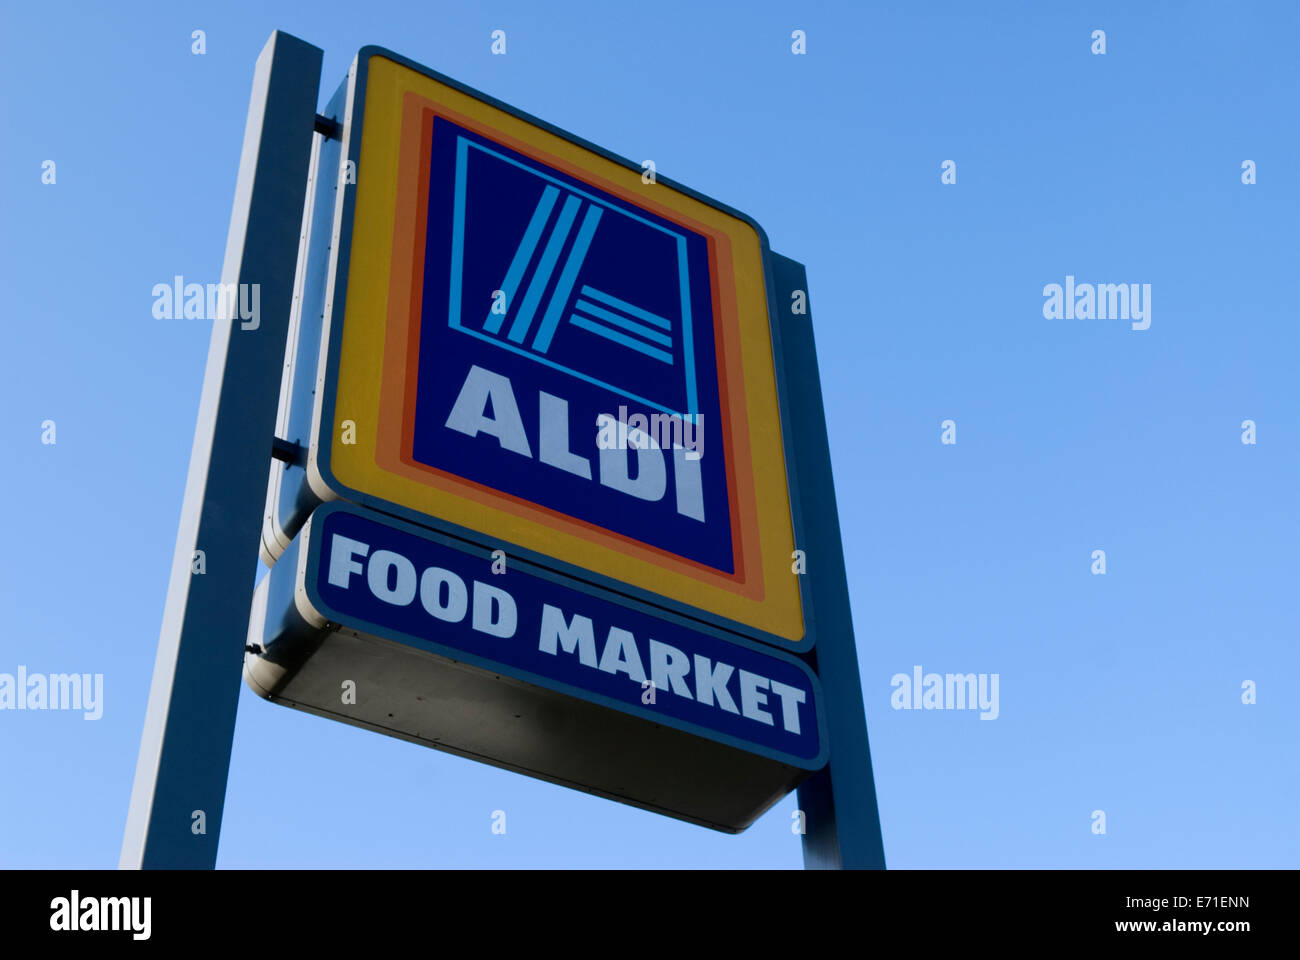 Aldi Food Market sign USA Stock Photo